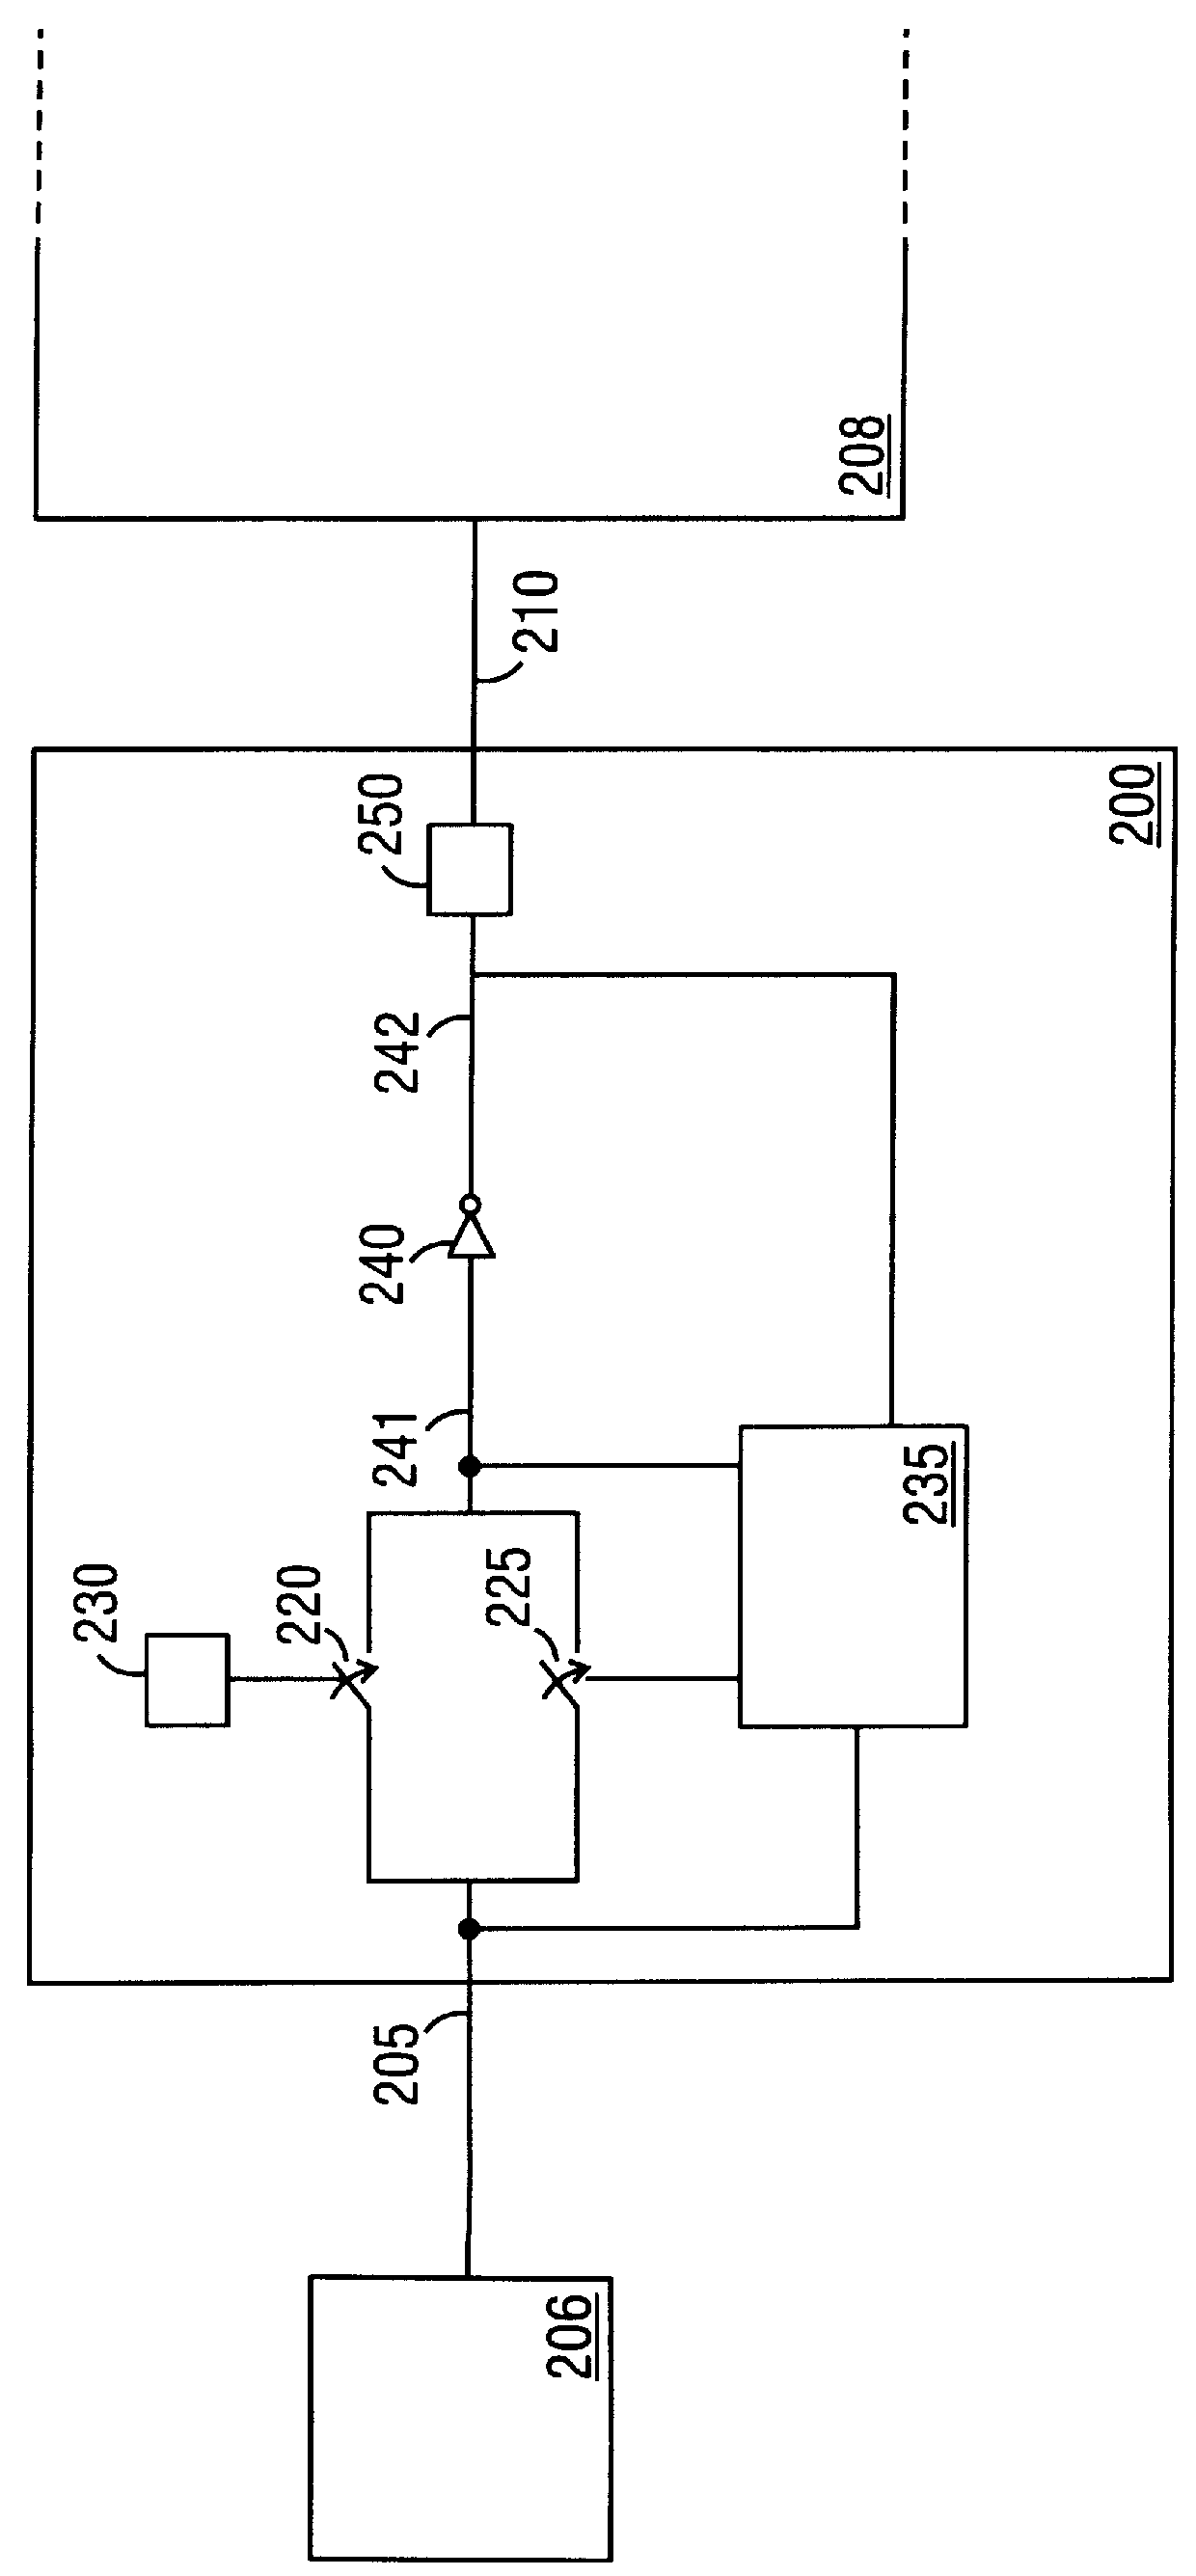 Pass gate input buffer for a mixed voltage environment